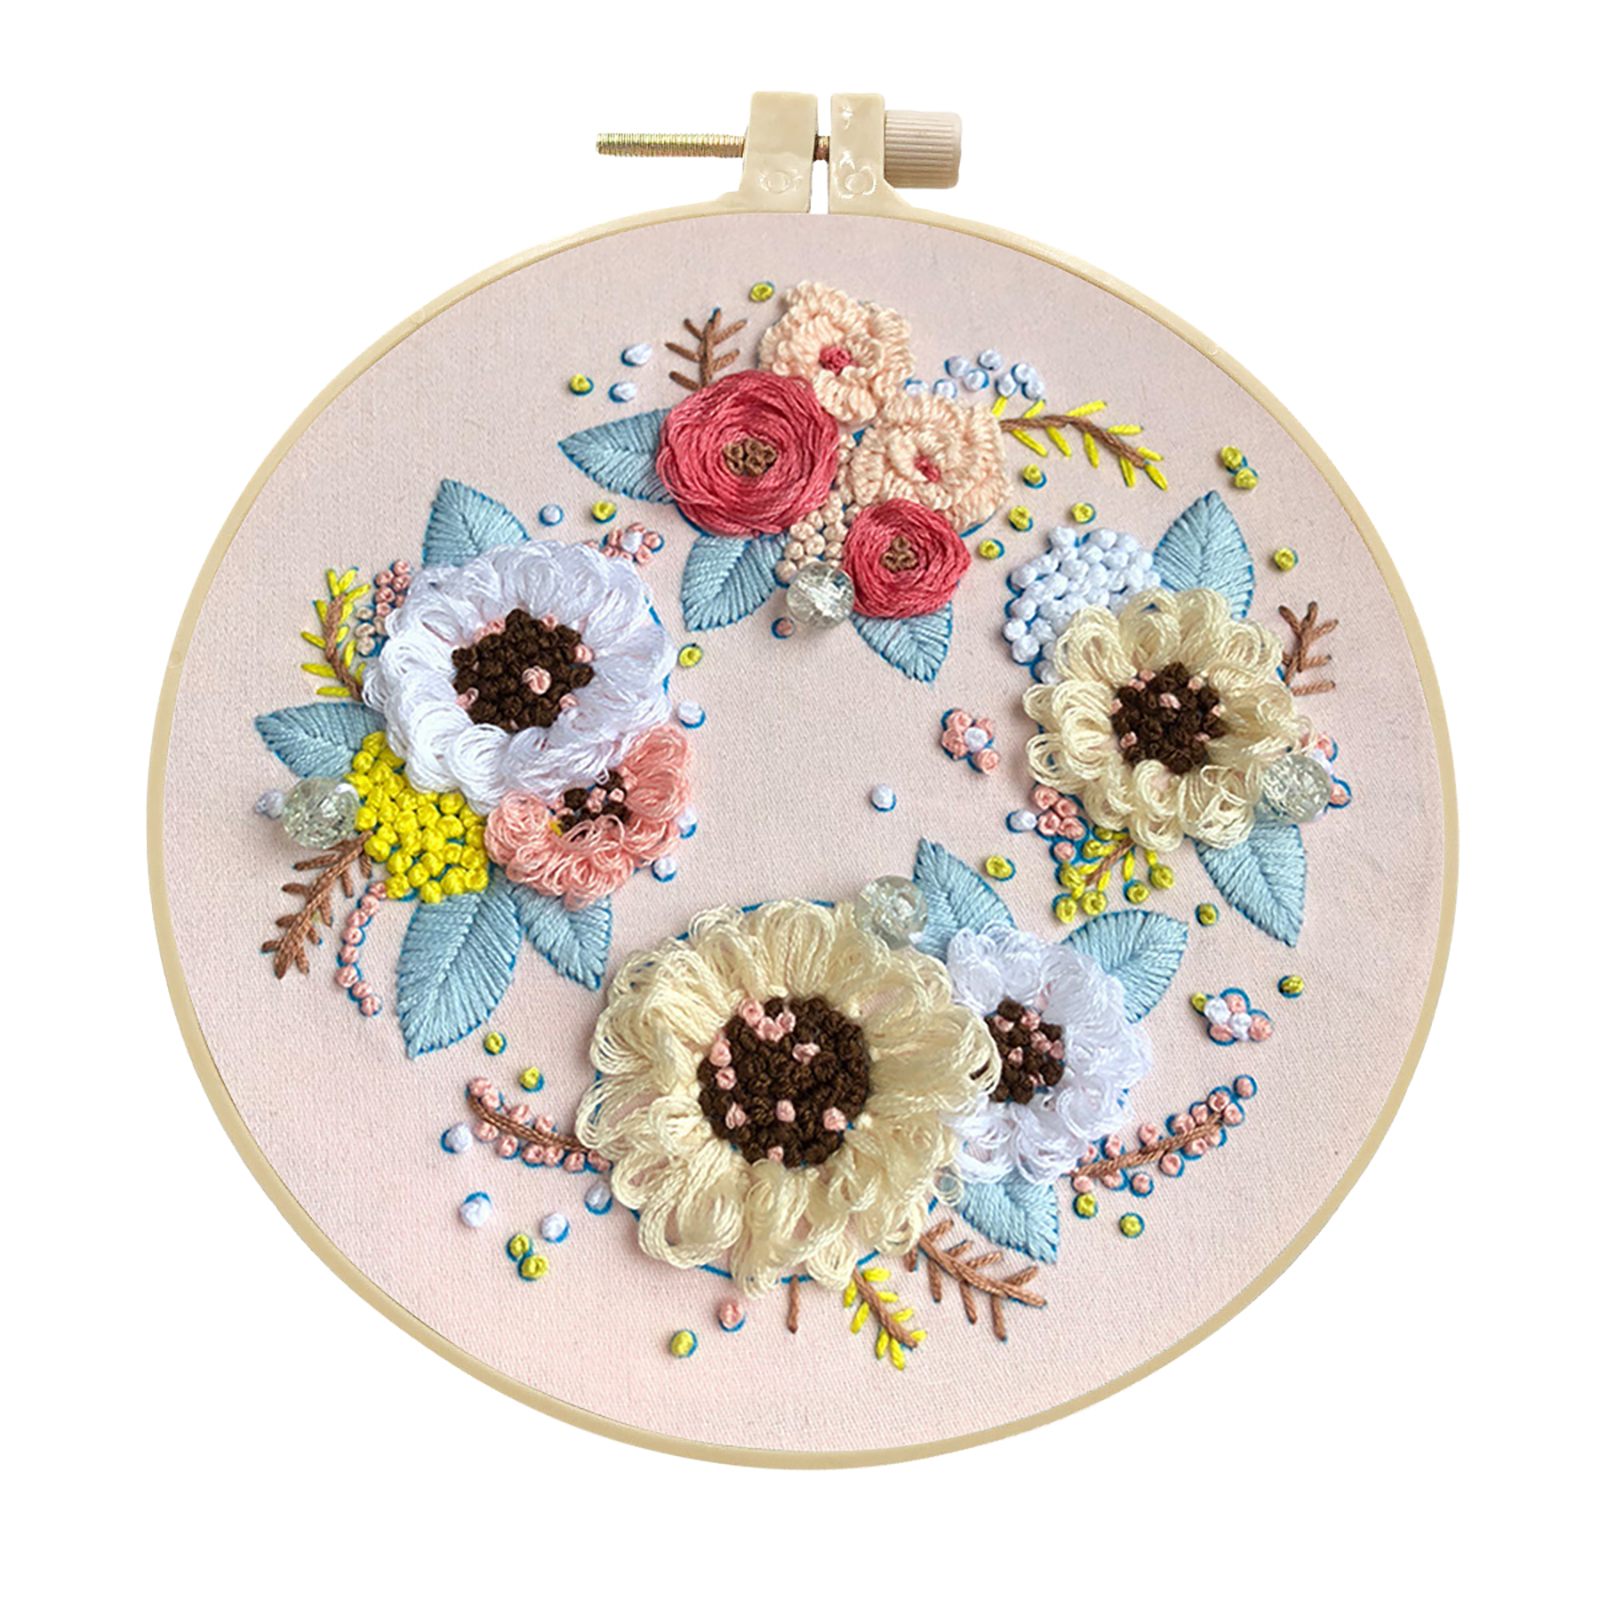 Handmade Embroidery Kit Cross stitch kit for Adult Beginner - Handful of Chrysanthemum Pattern